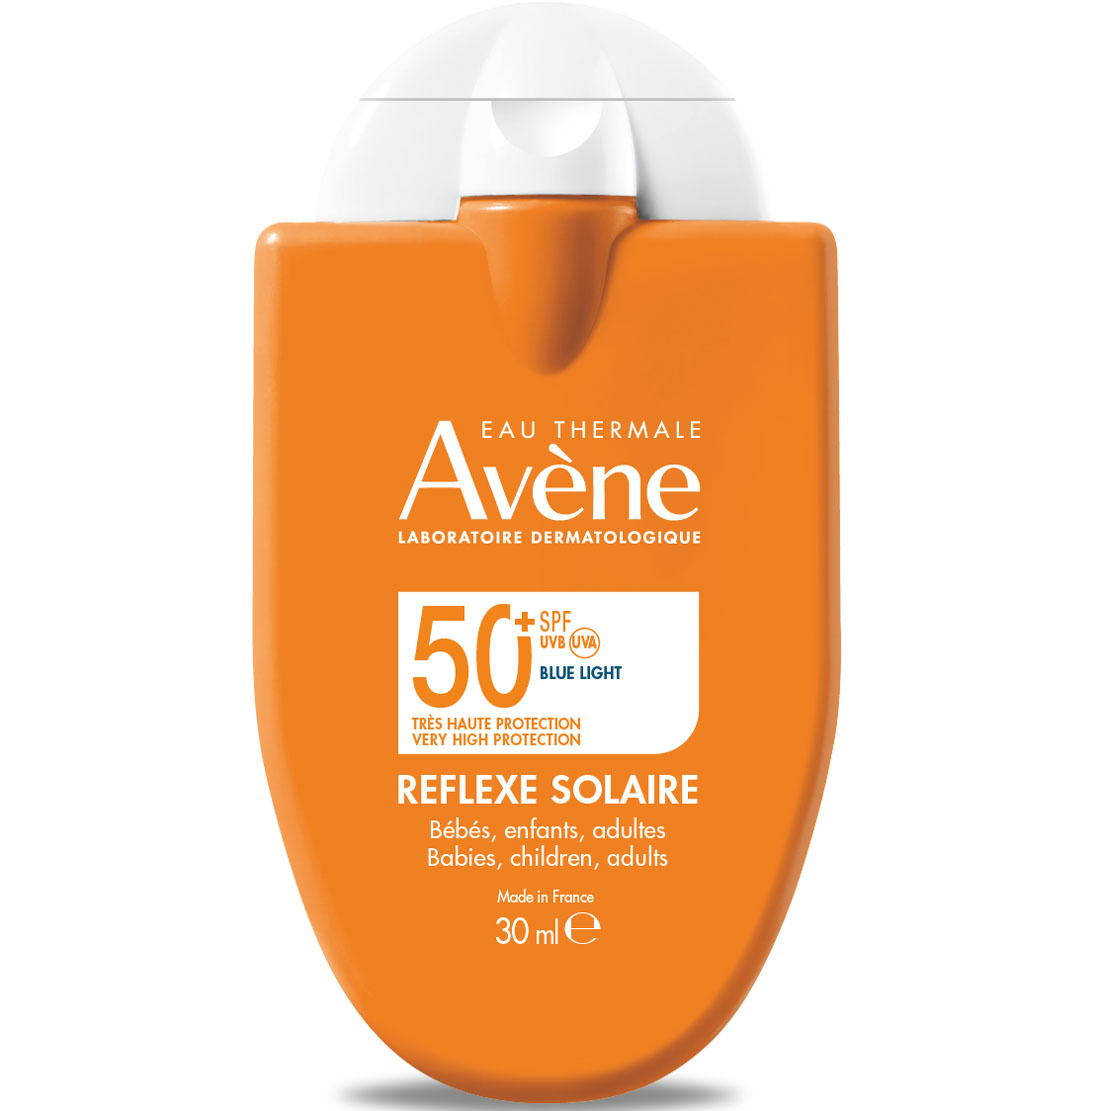 Avene Солнцезащитная компакт-эмульсия для всей семьи SPF 50+, 30 мл (Avene, Suncare)